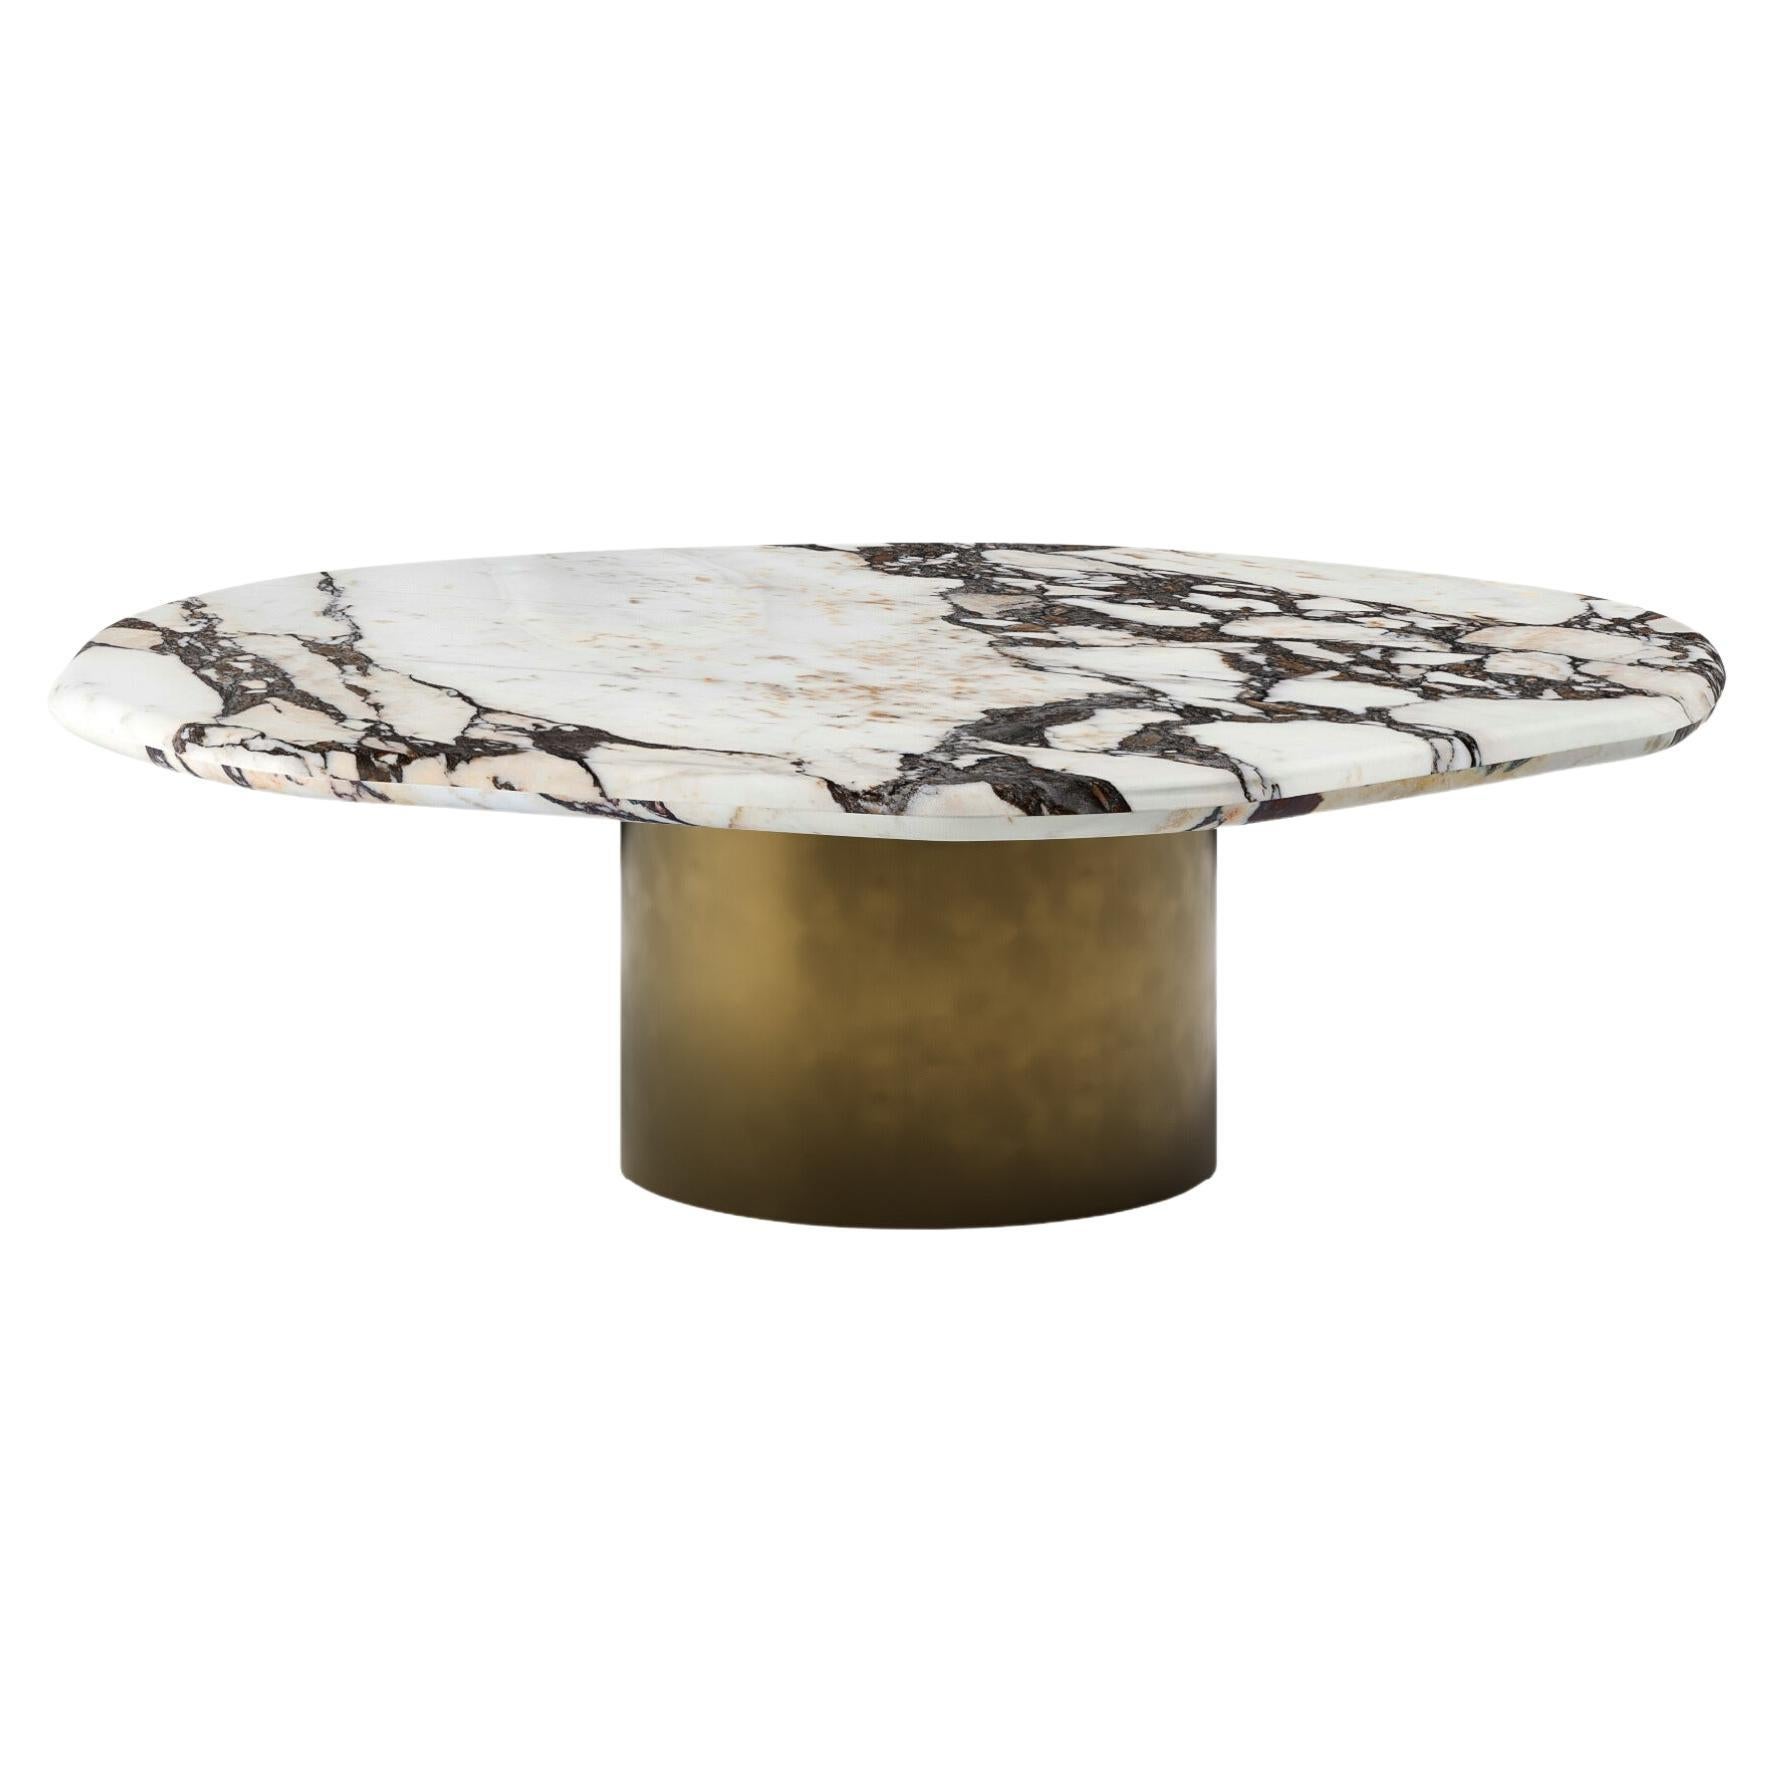 FORM(LA) Lago Round Coffee Table 48”L x 48”W x 14”H Viola Marble & Bronze For Sale